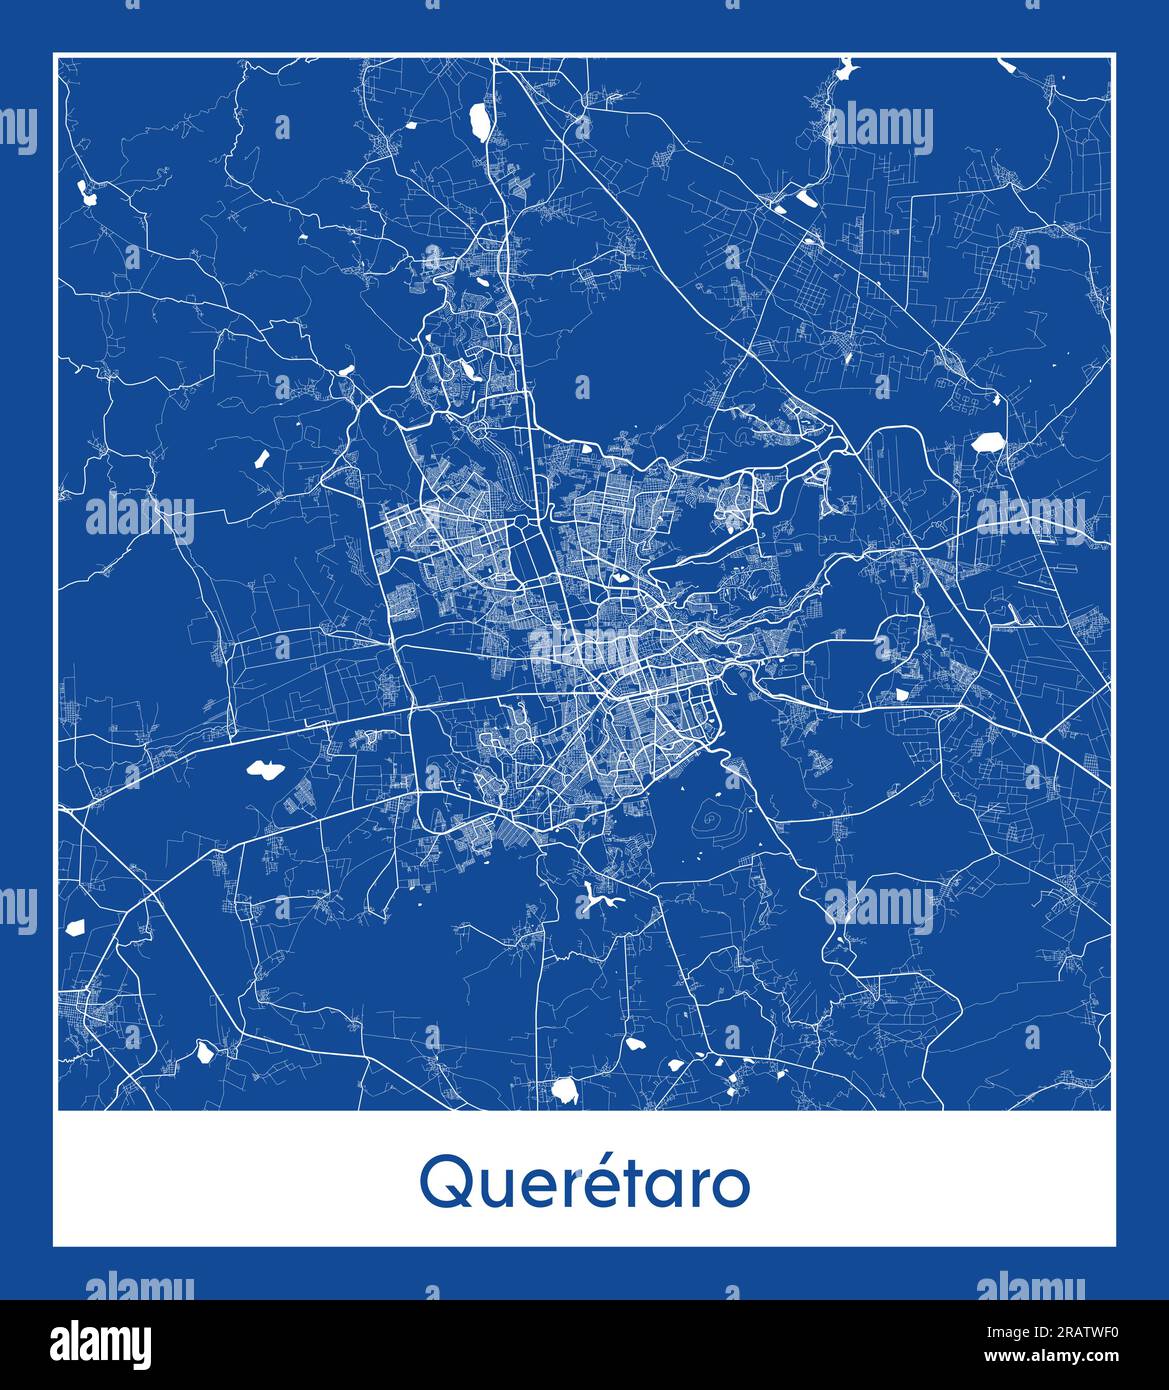 Queretaro Mexico North America City map blue print vector illustration Stock Vector